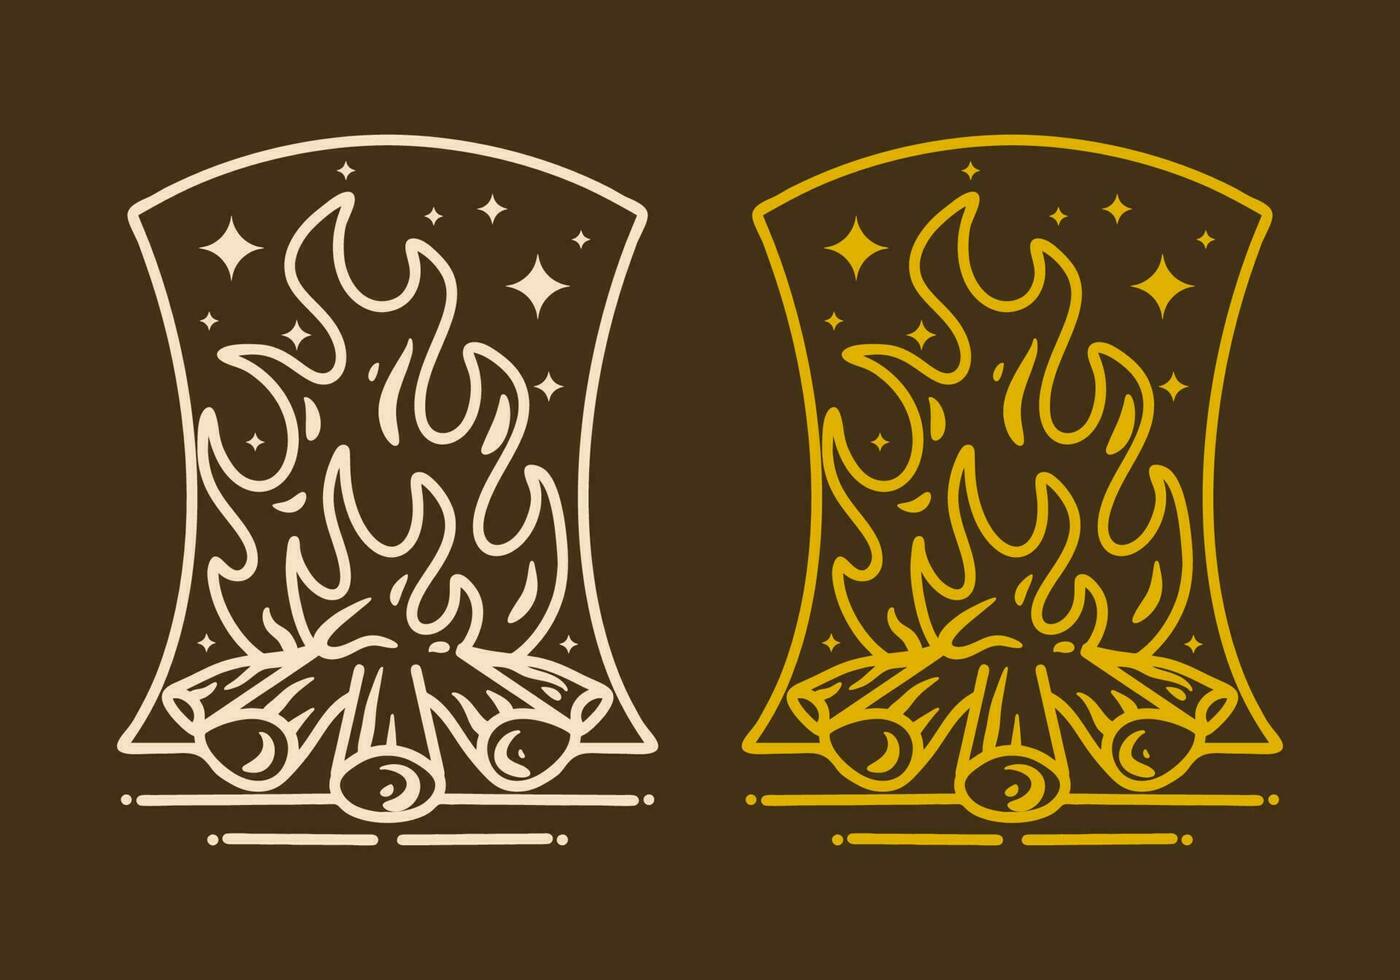 Mono line art illustration of a bonfire vector